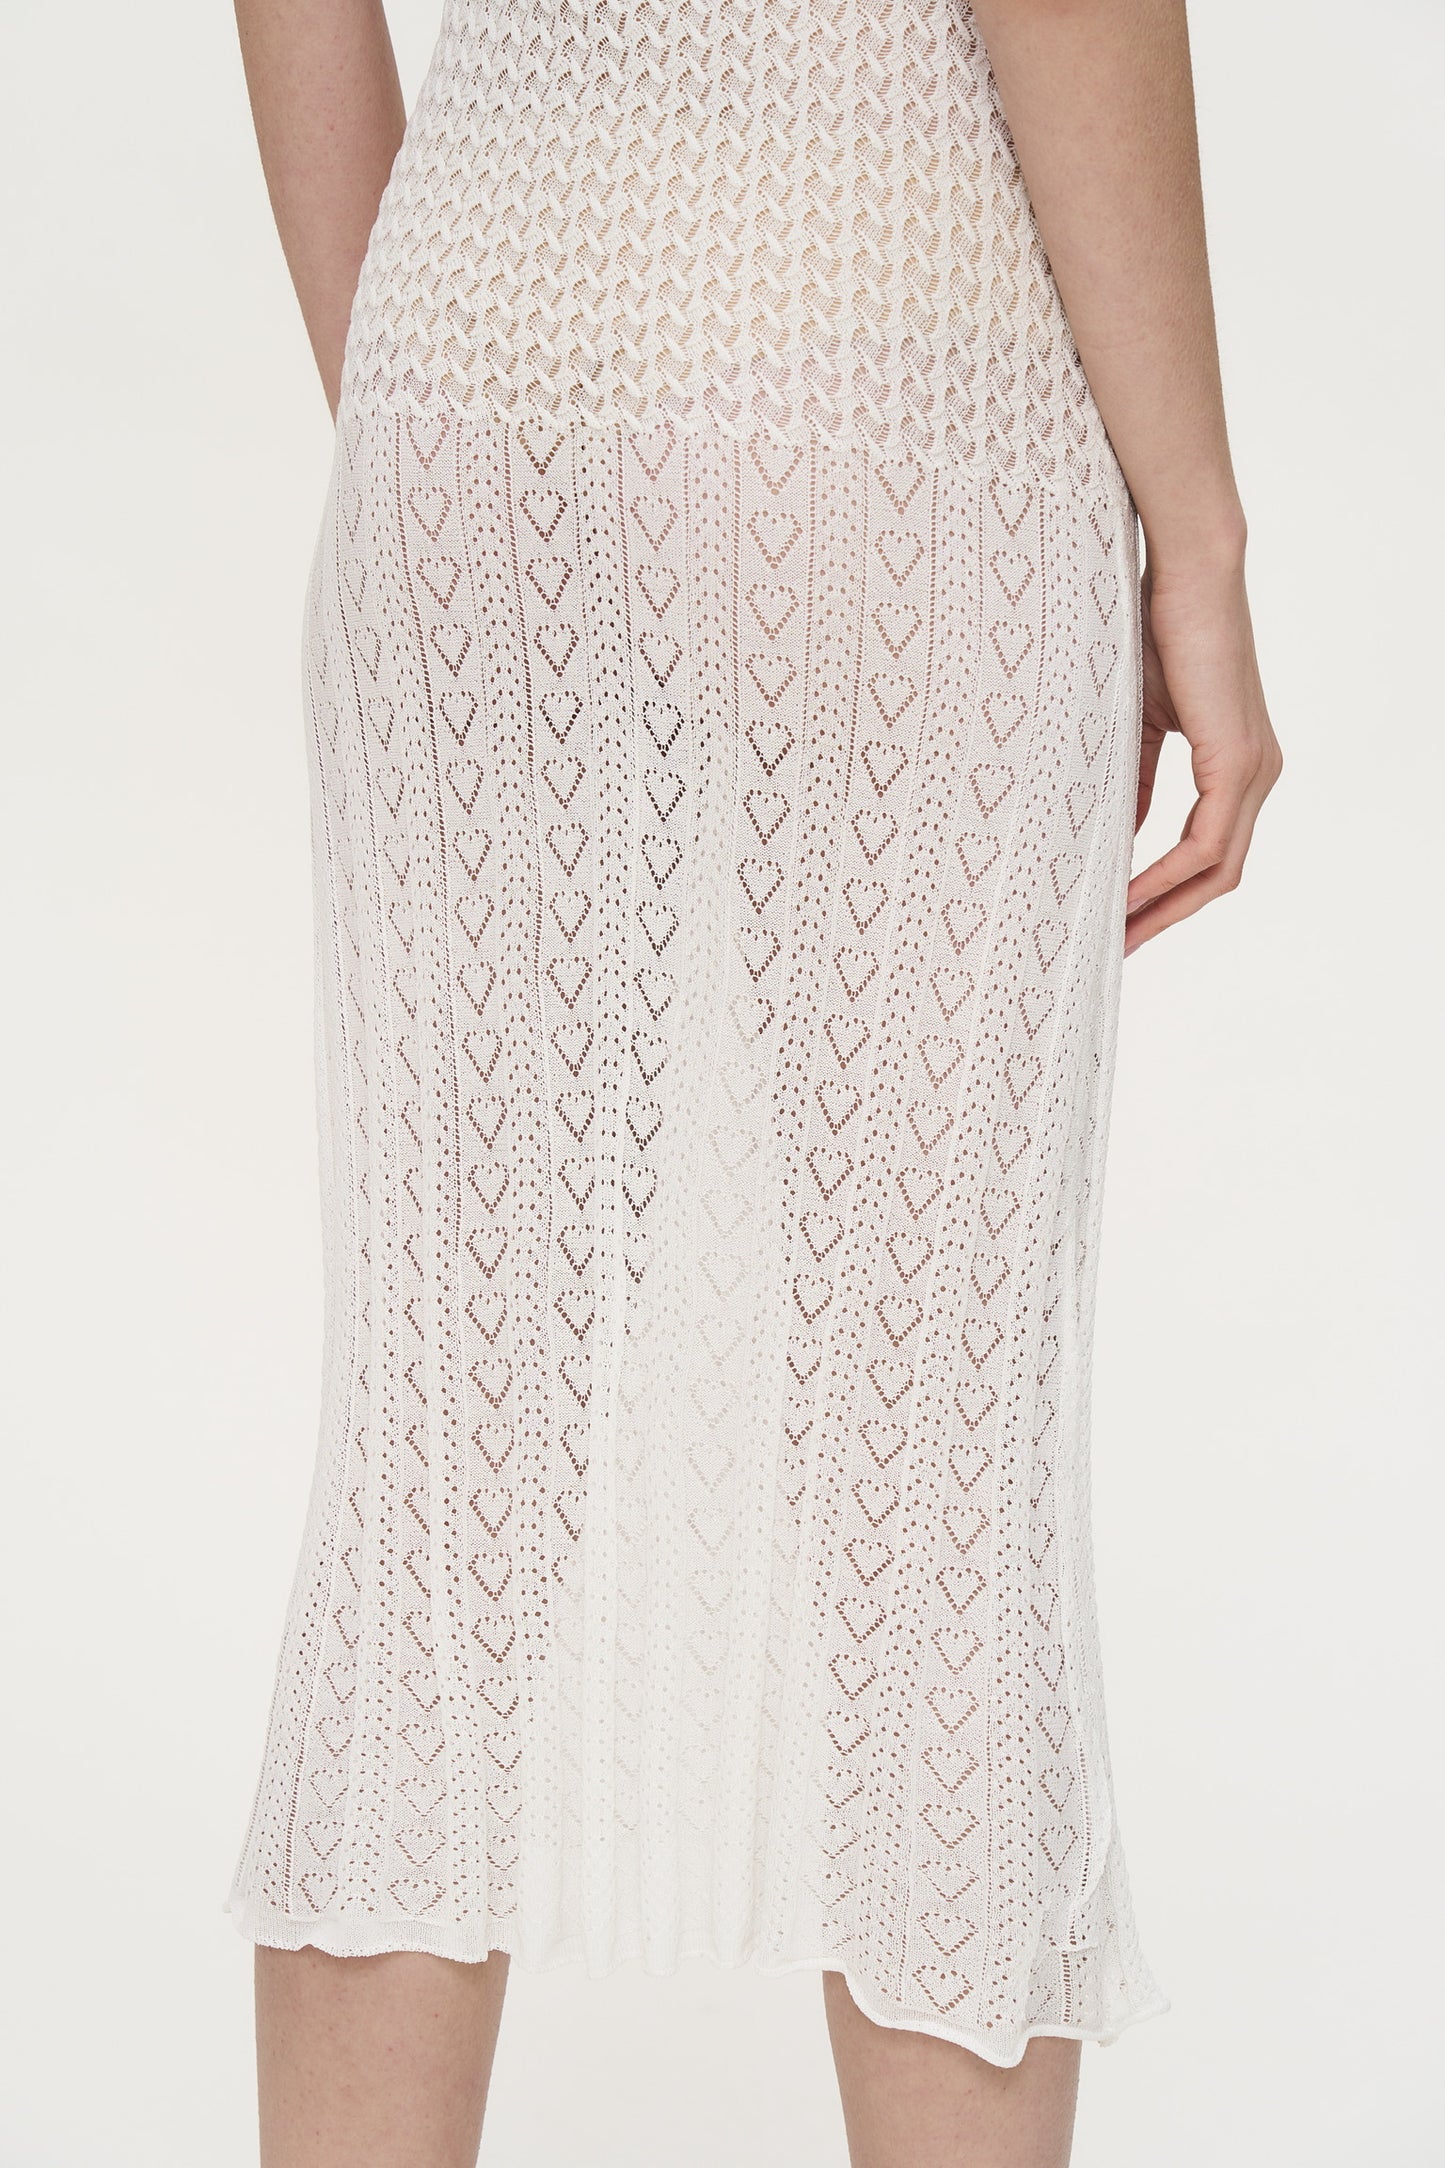 Bella Cropped Knit Dress in White